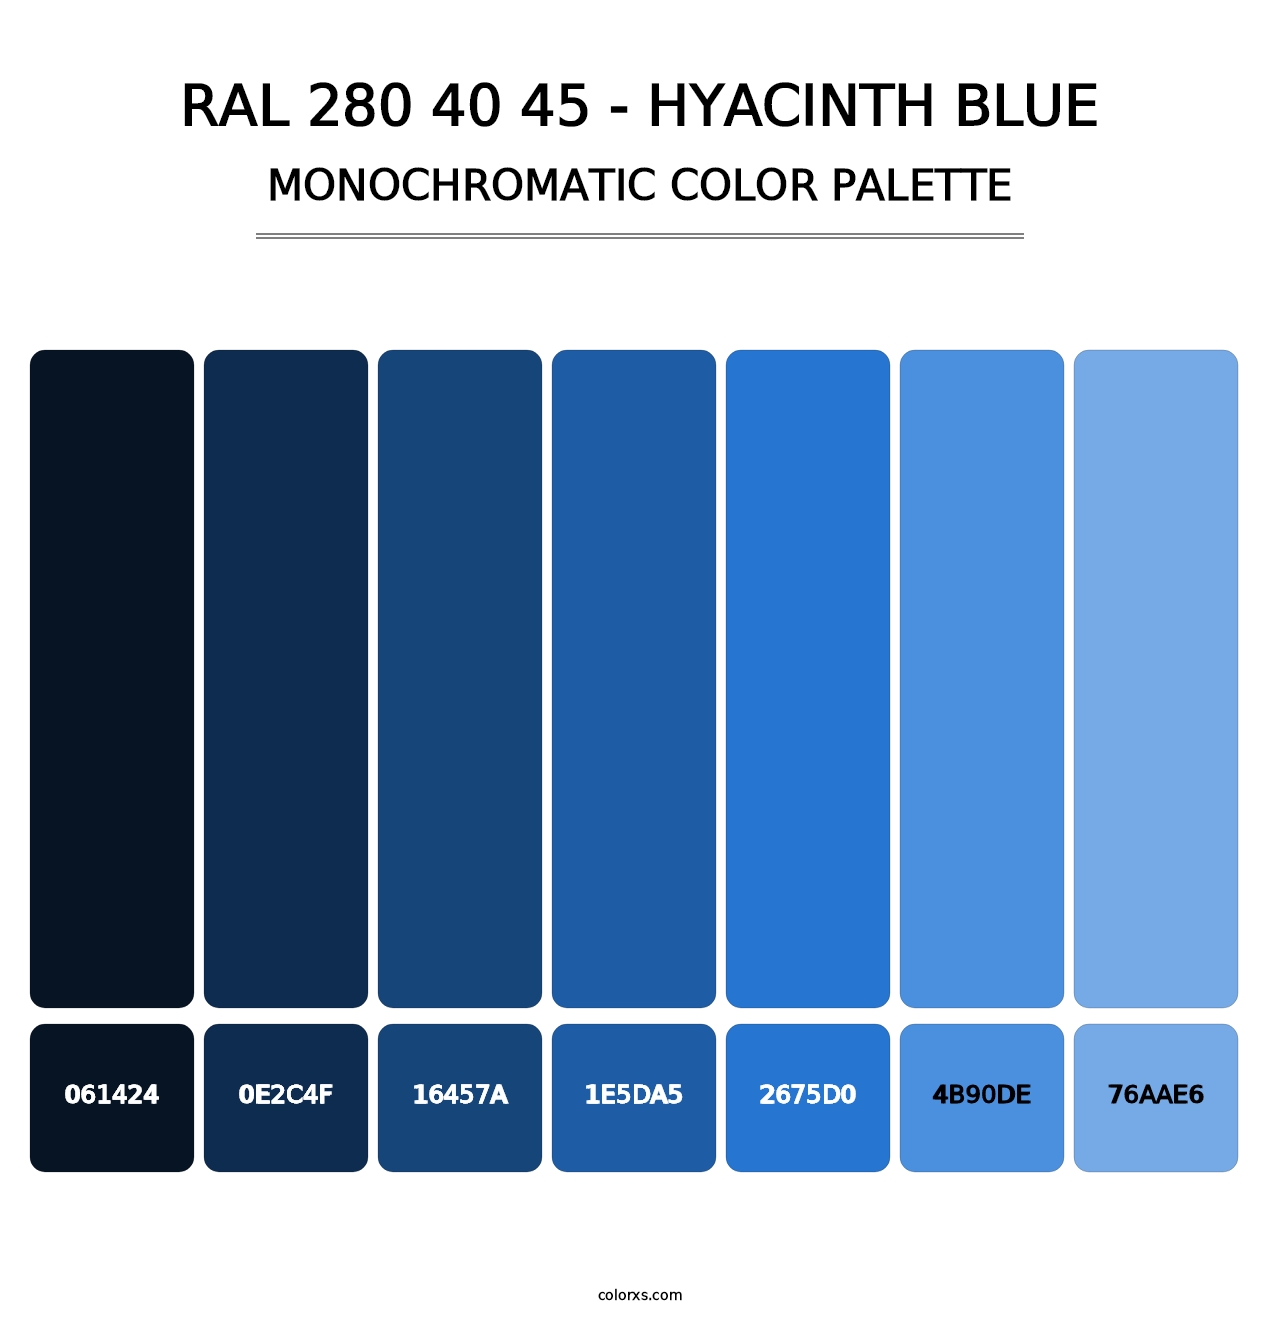 RAL 280 40 45 - Hyacinth Blue - Monochromatic Color Palette